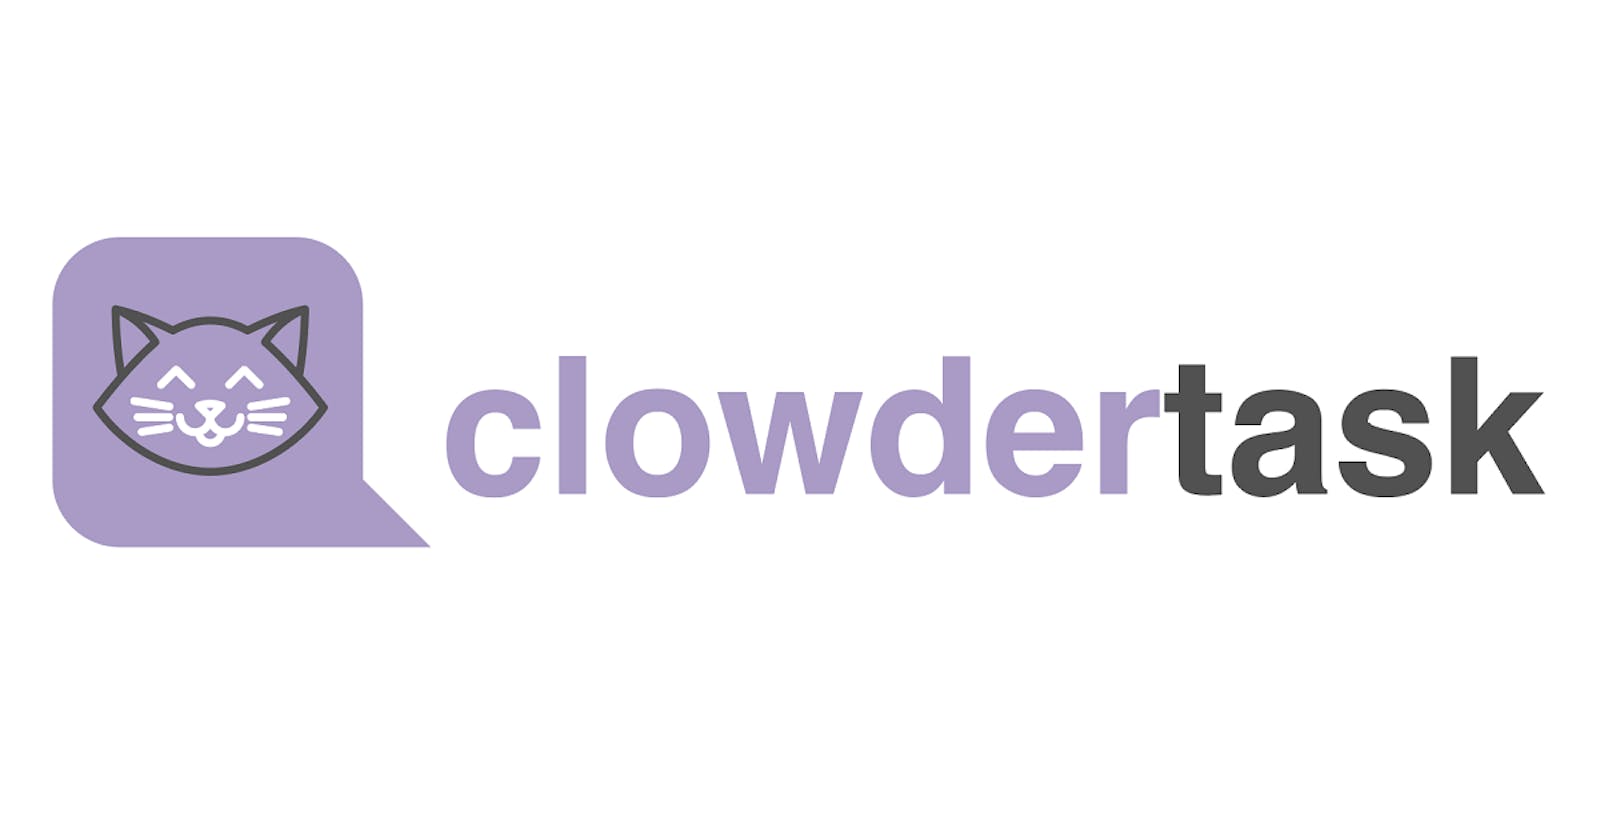 Introducing myself and ClowderTask